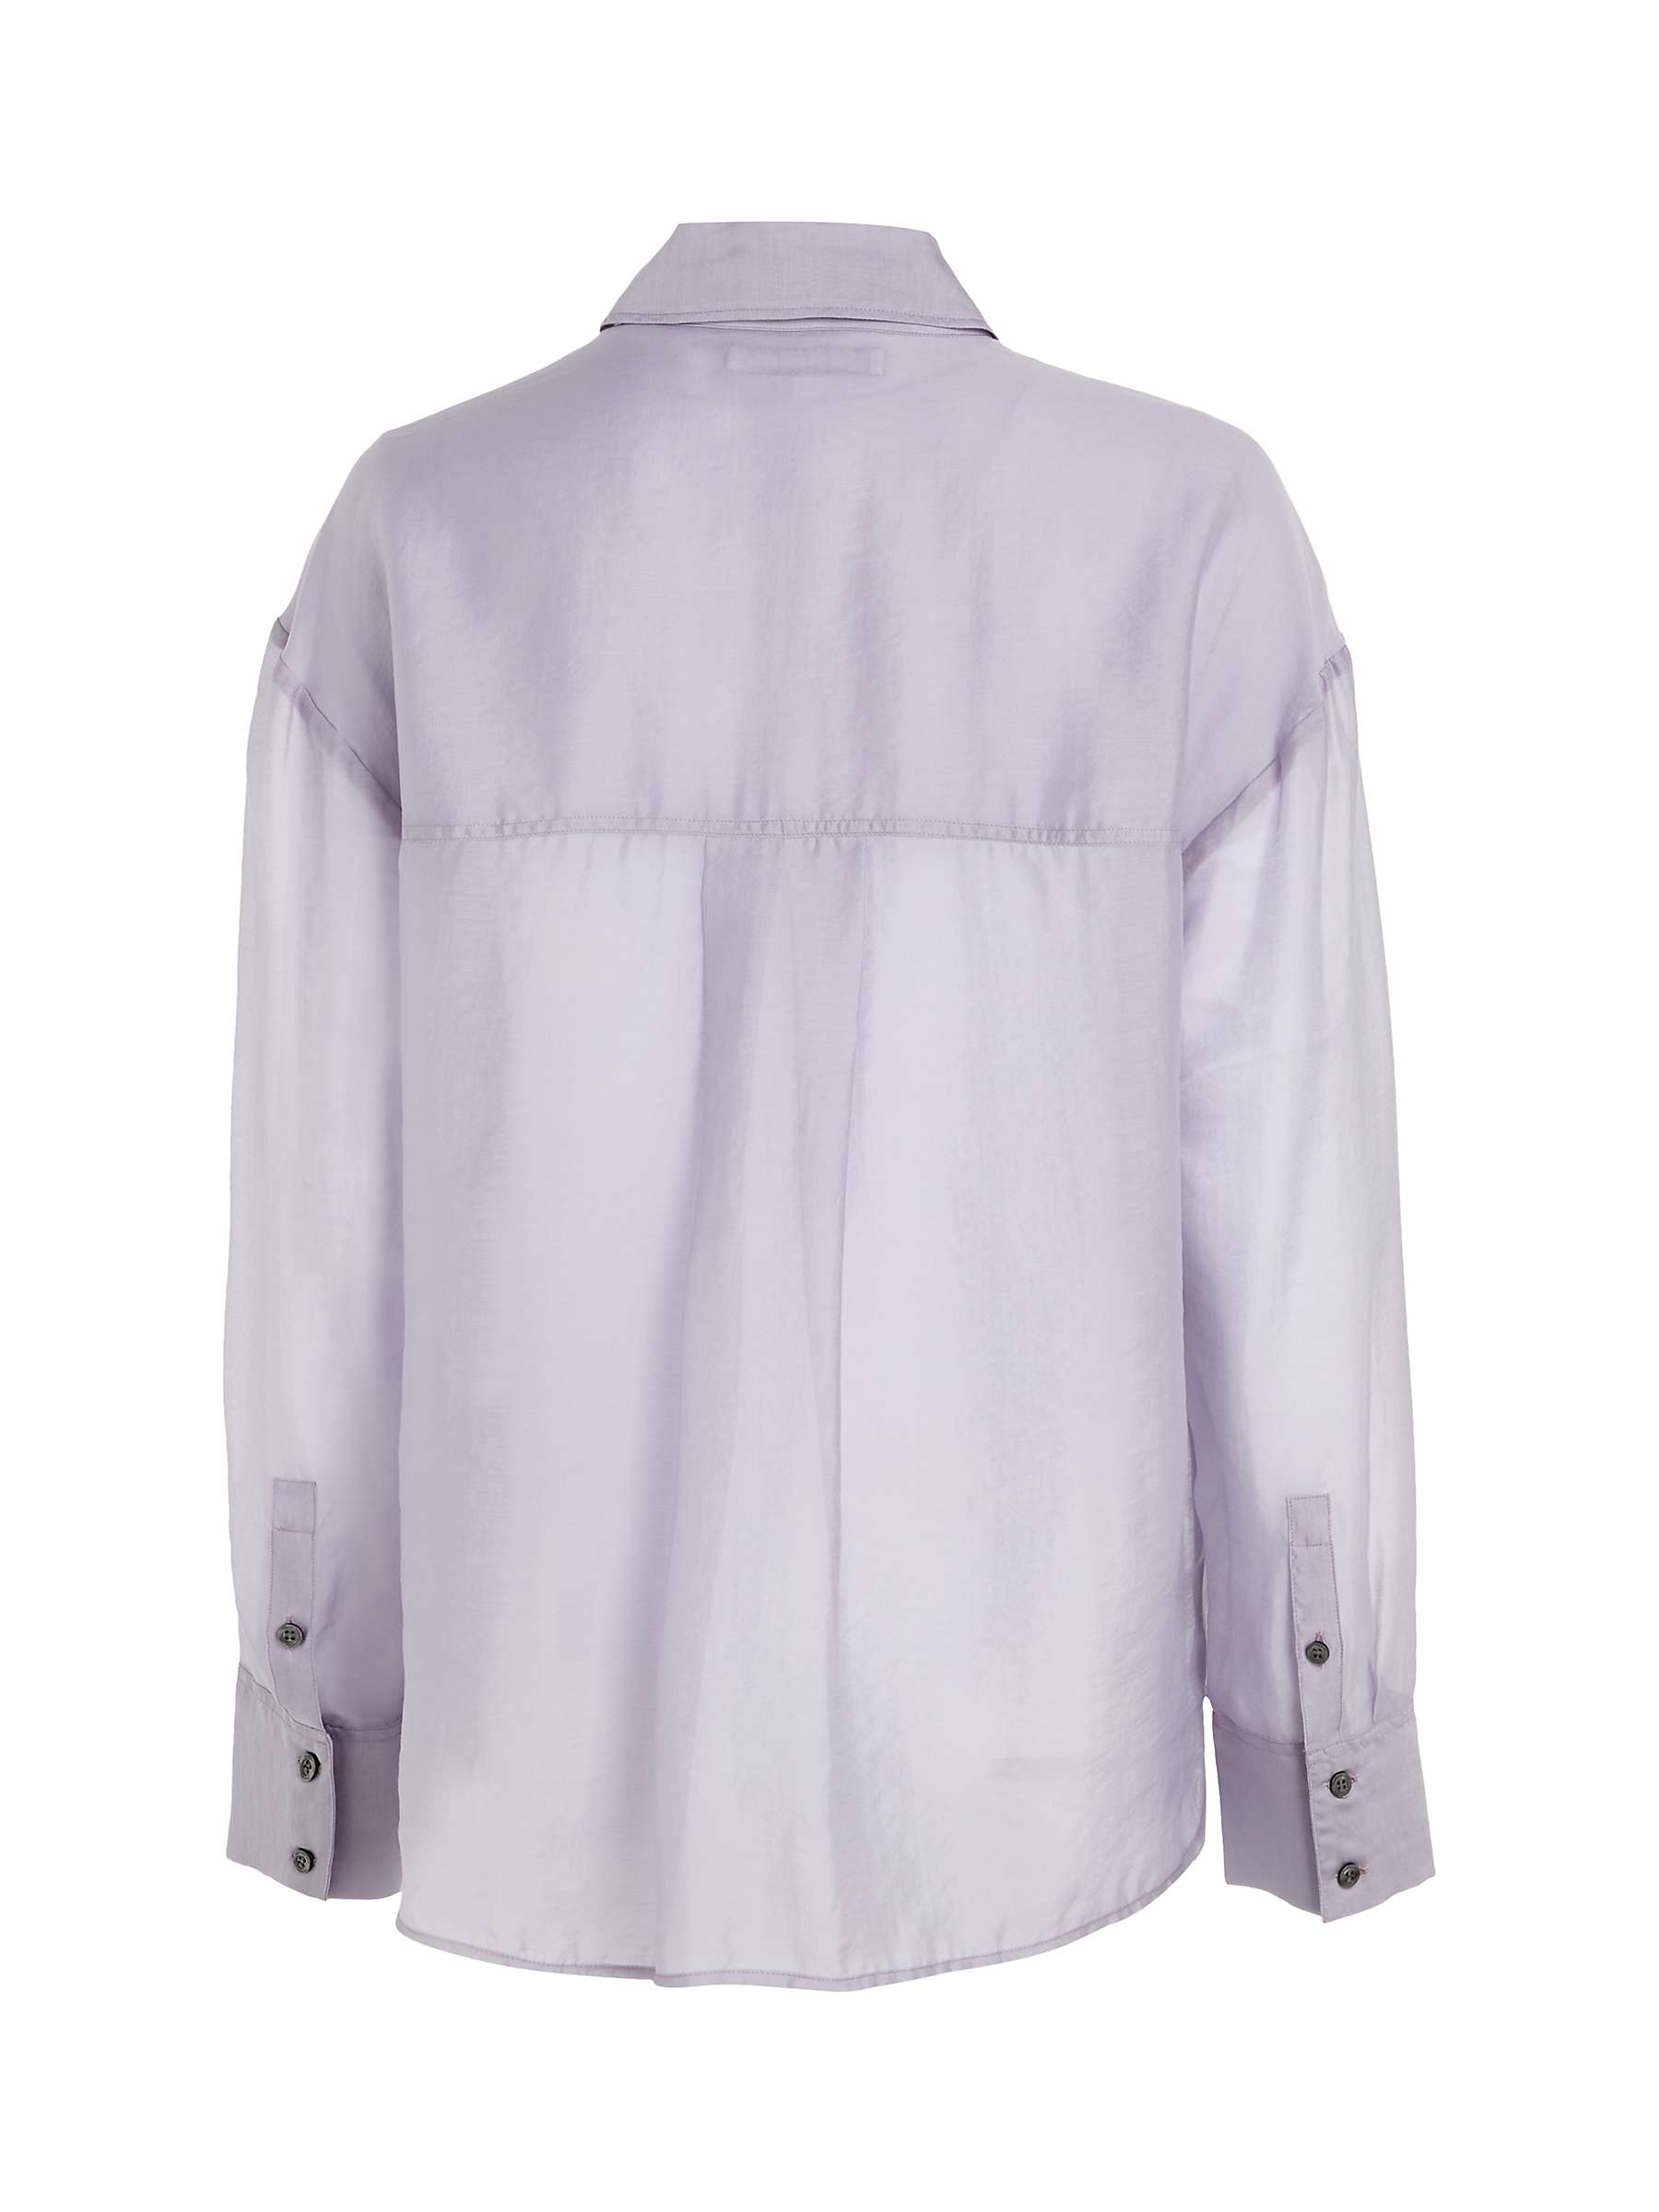 Buy Calvin Klein Relaxed Long Sleeve Shirt, Lavender Aura Online at johnlewis.com